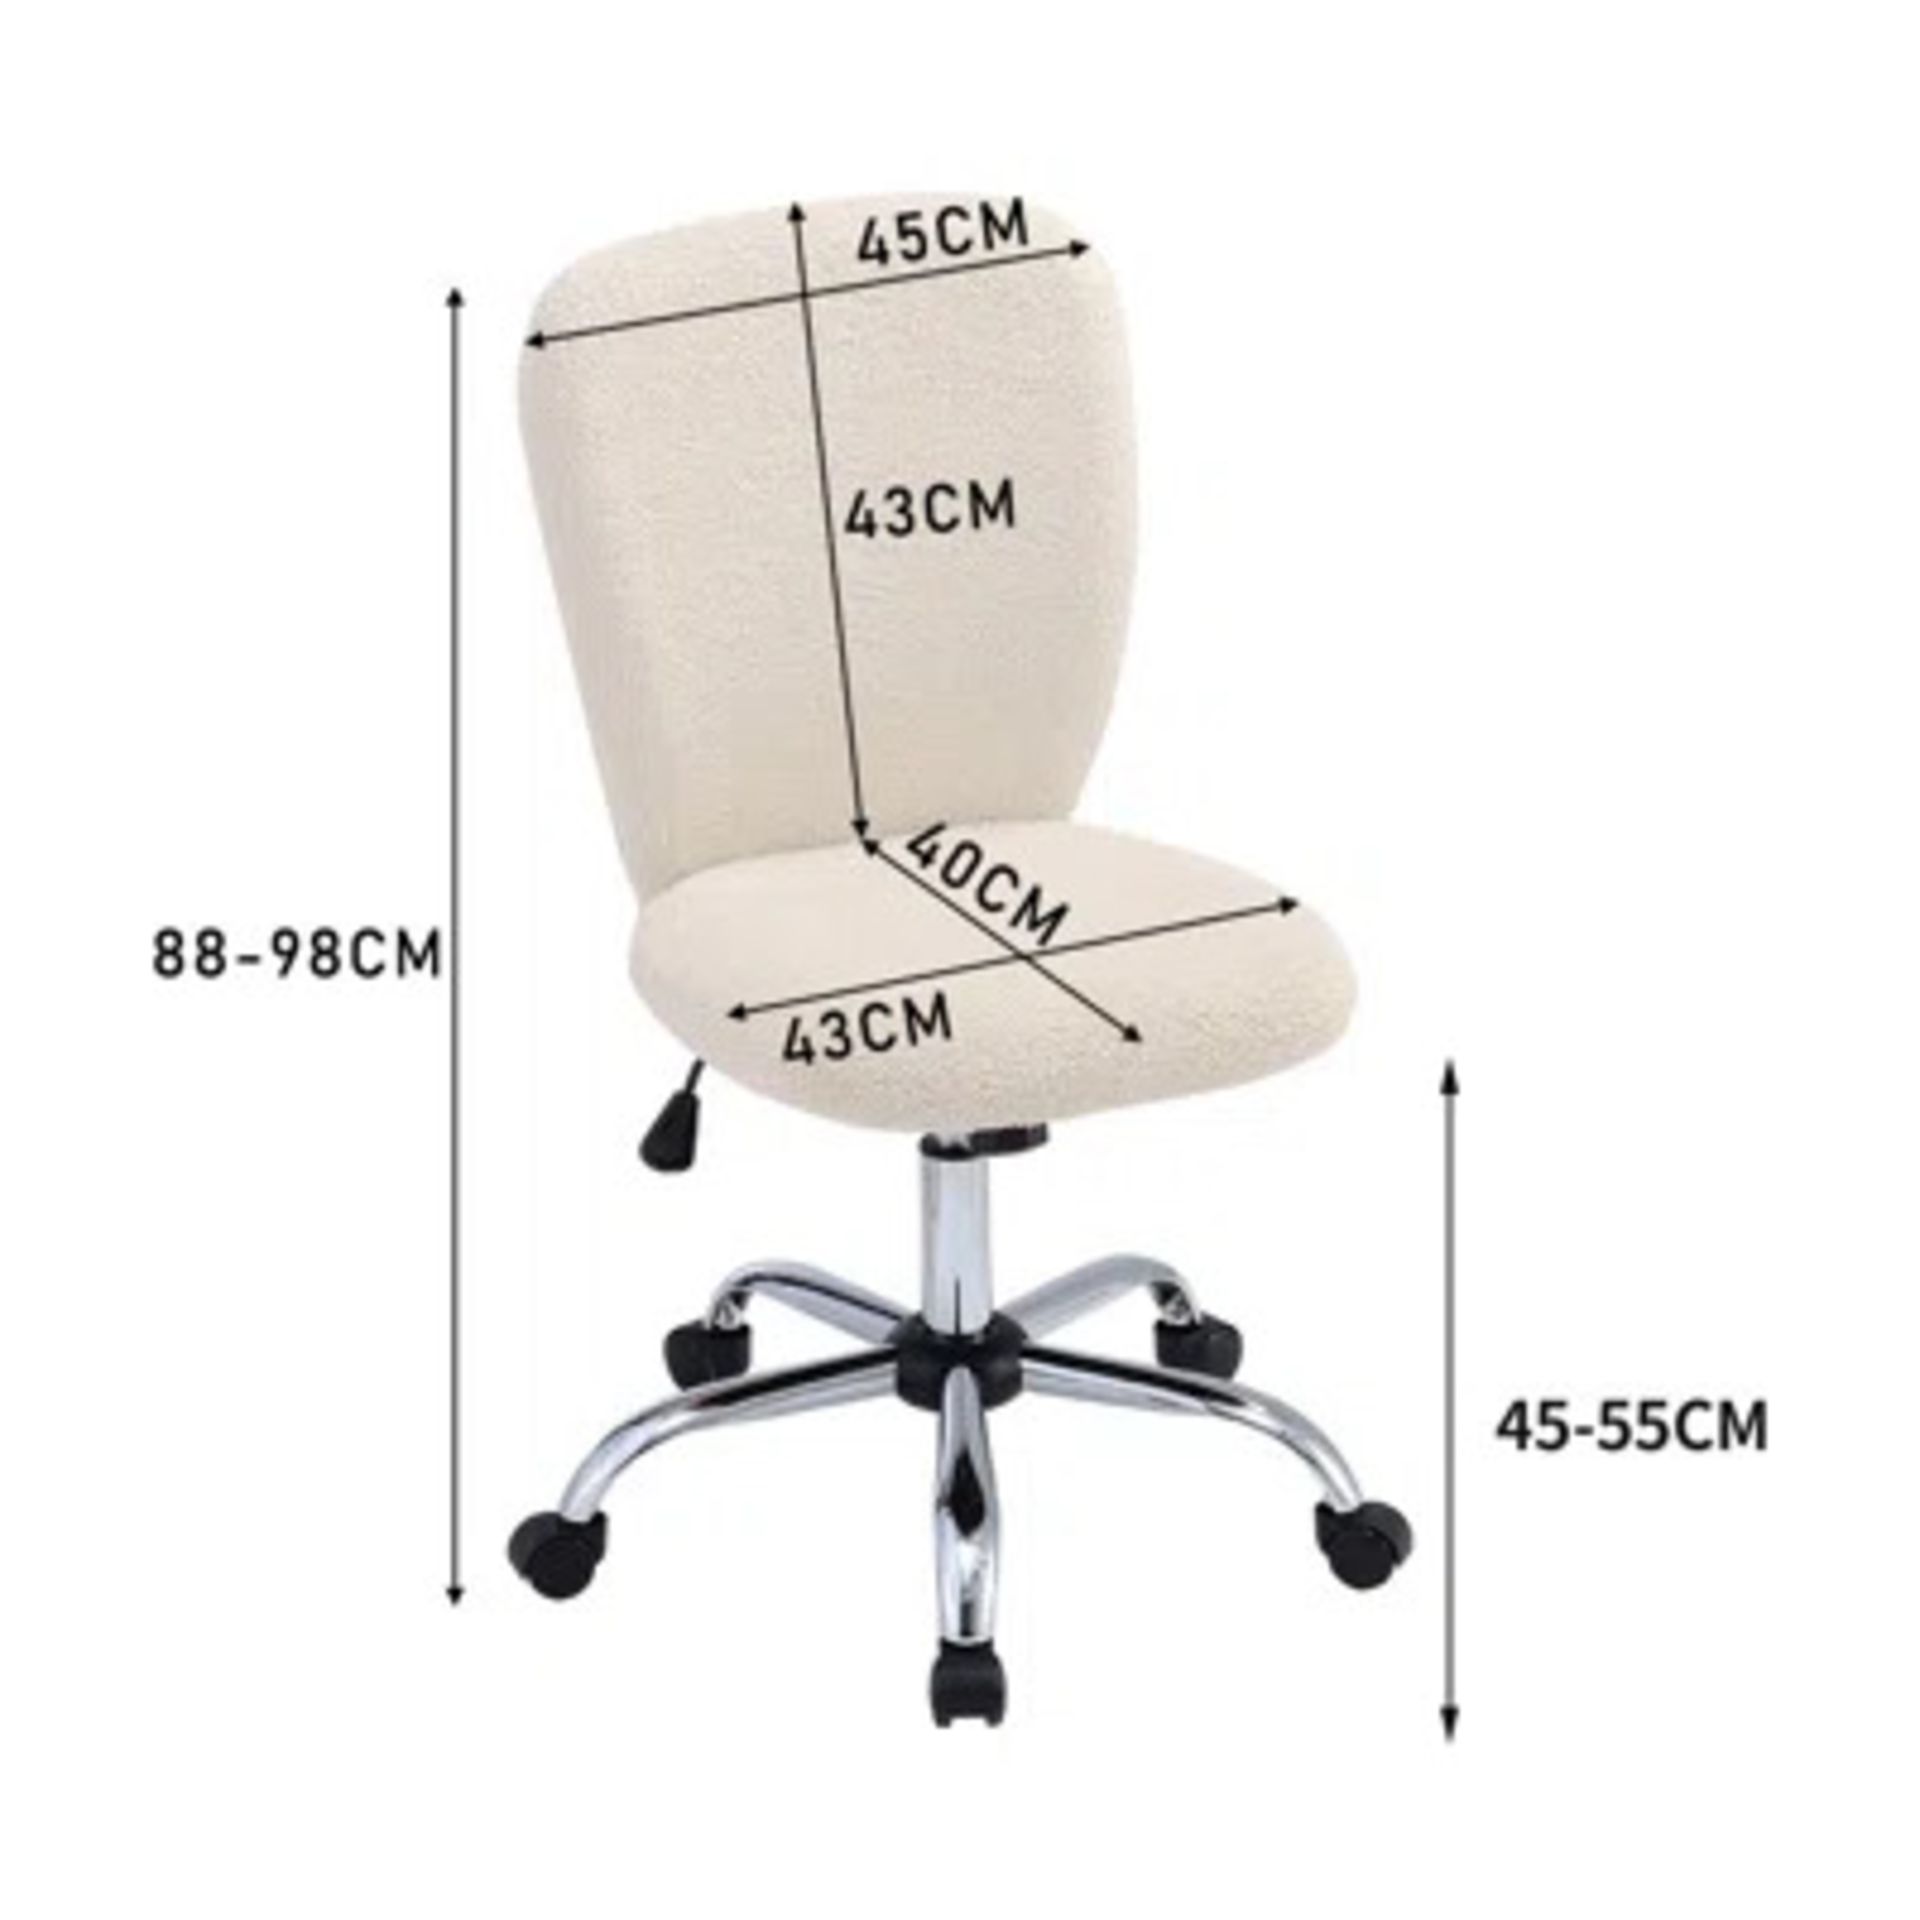 RRP £70.99 - Krilov Ergonomic Office Chair Upholstery Colour: Beige - Image 5 of 6